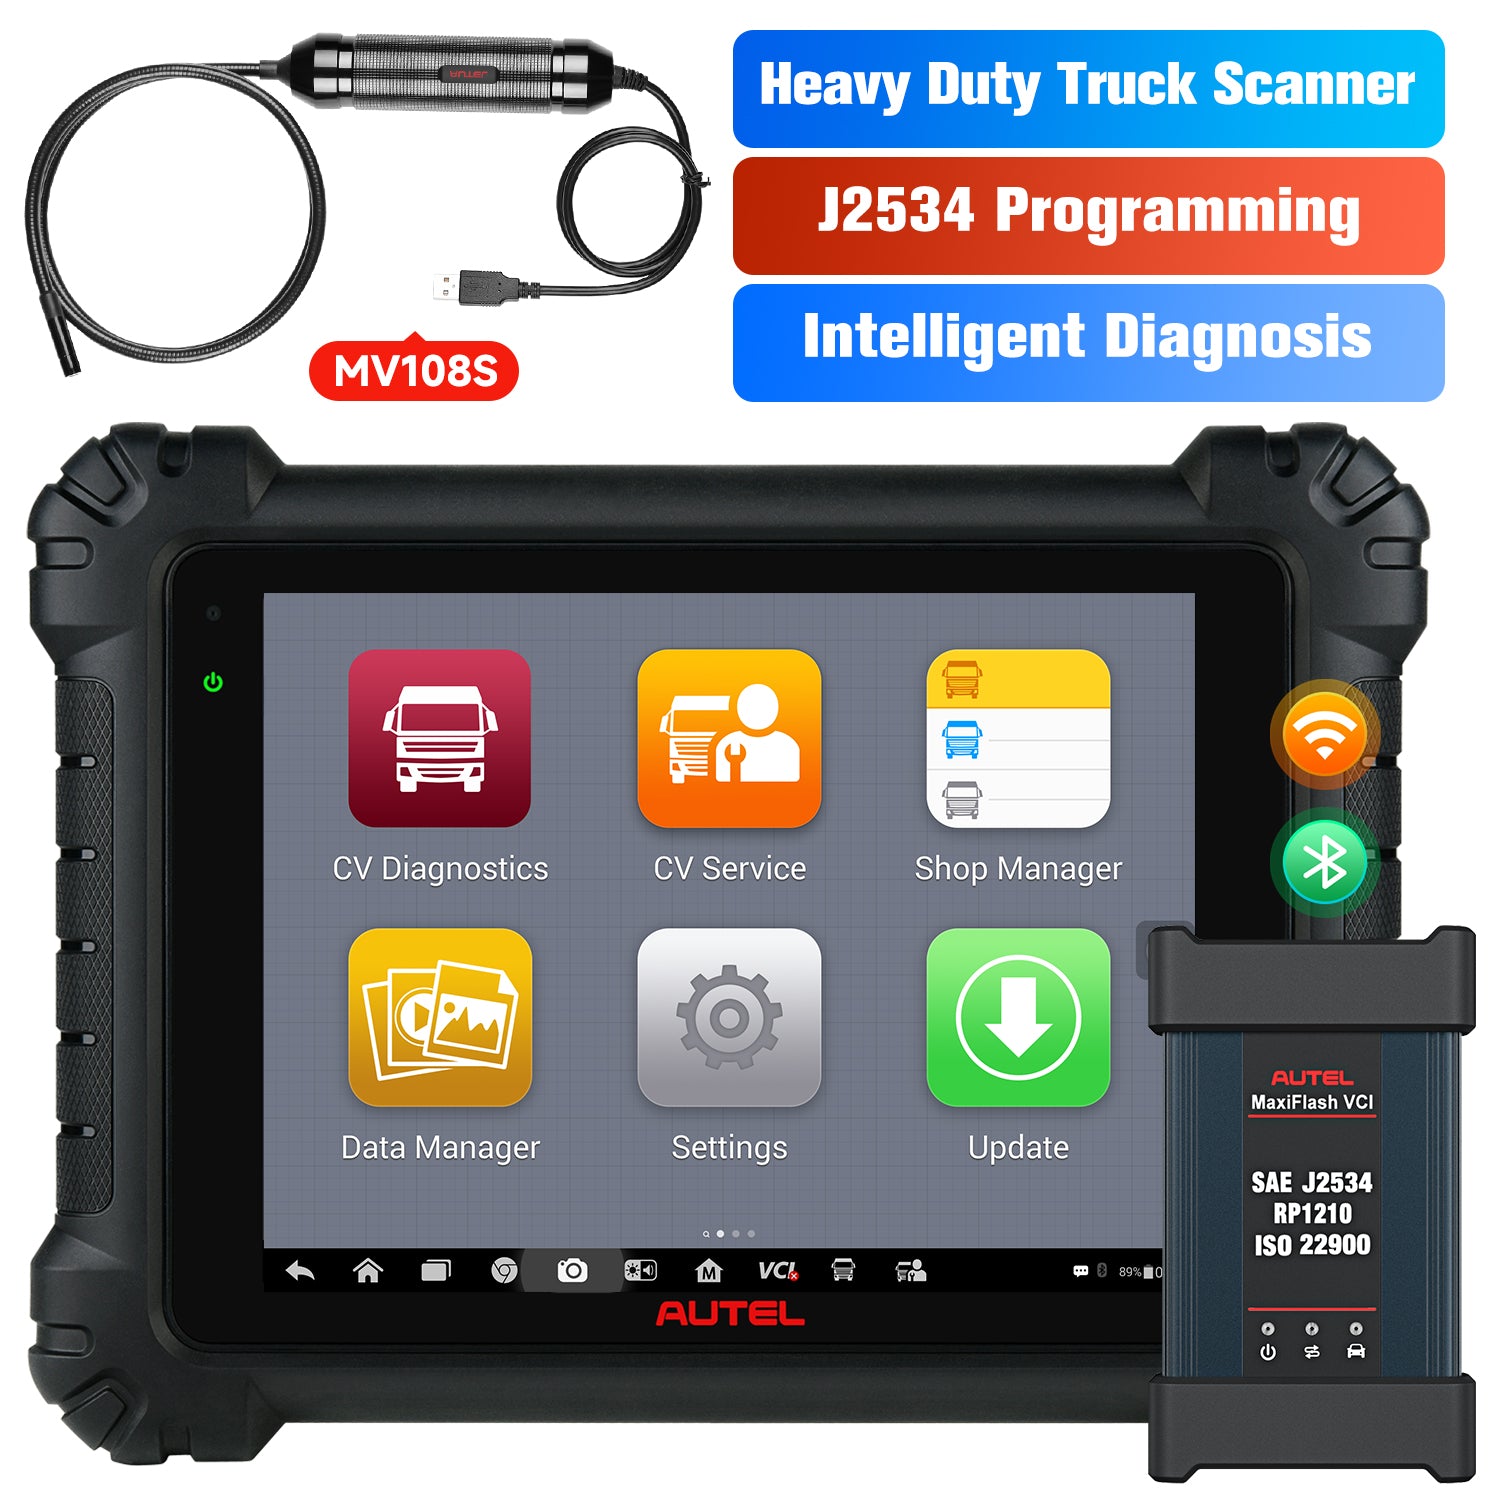 Autel Maxisys MS909CV and MV108S heavy duty truck scanner j2534 programming intelligent diagnosis